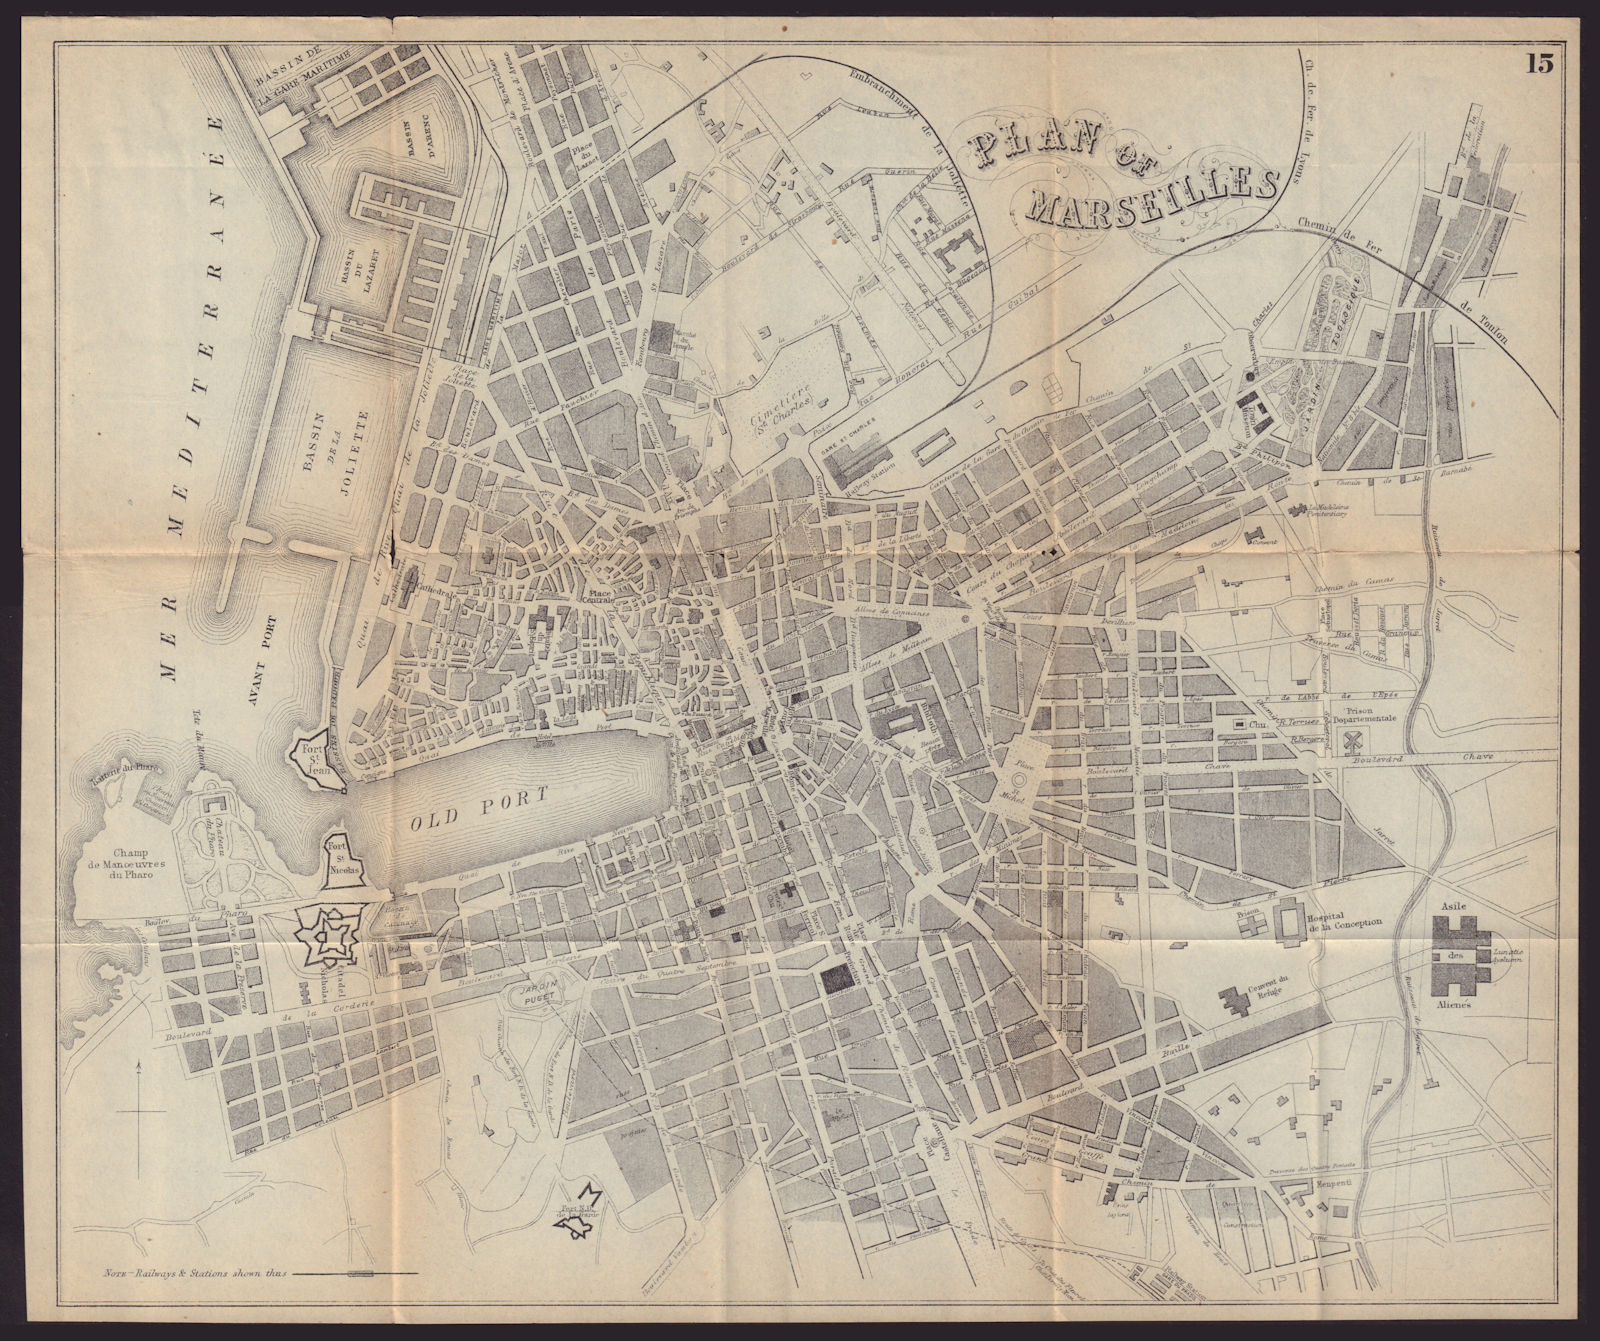 MARSEILLES antique town plan city map. France. BRADSHAW 1892 old